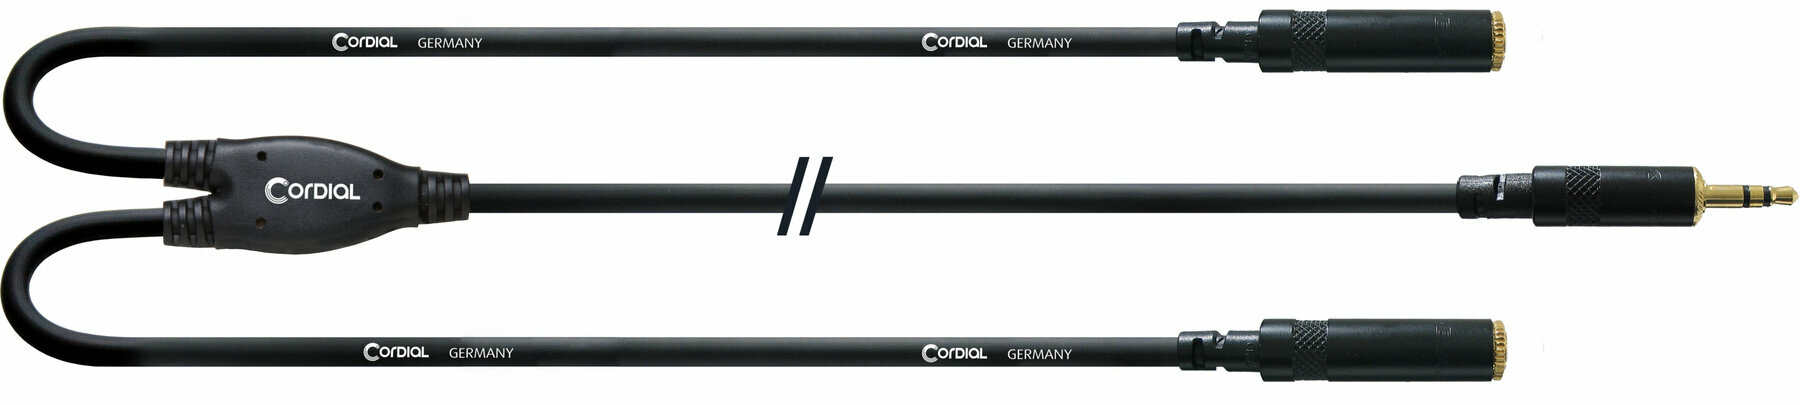 Audio kabel Cordial CFY 0,3 WYY 30 cm Audio kabel